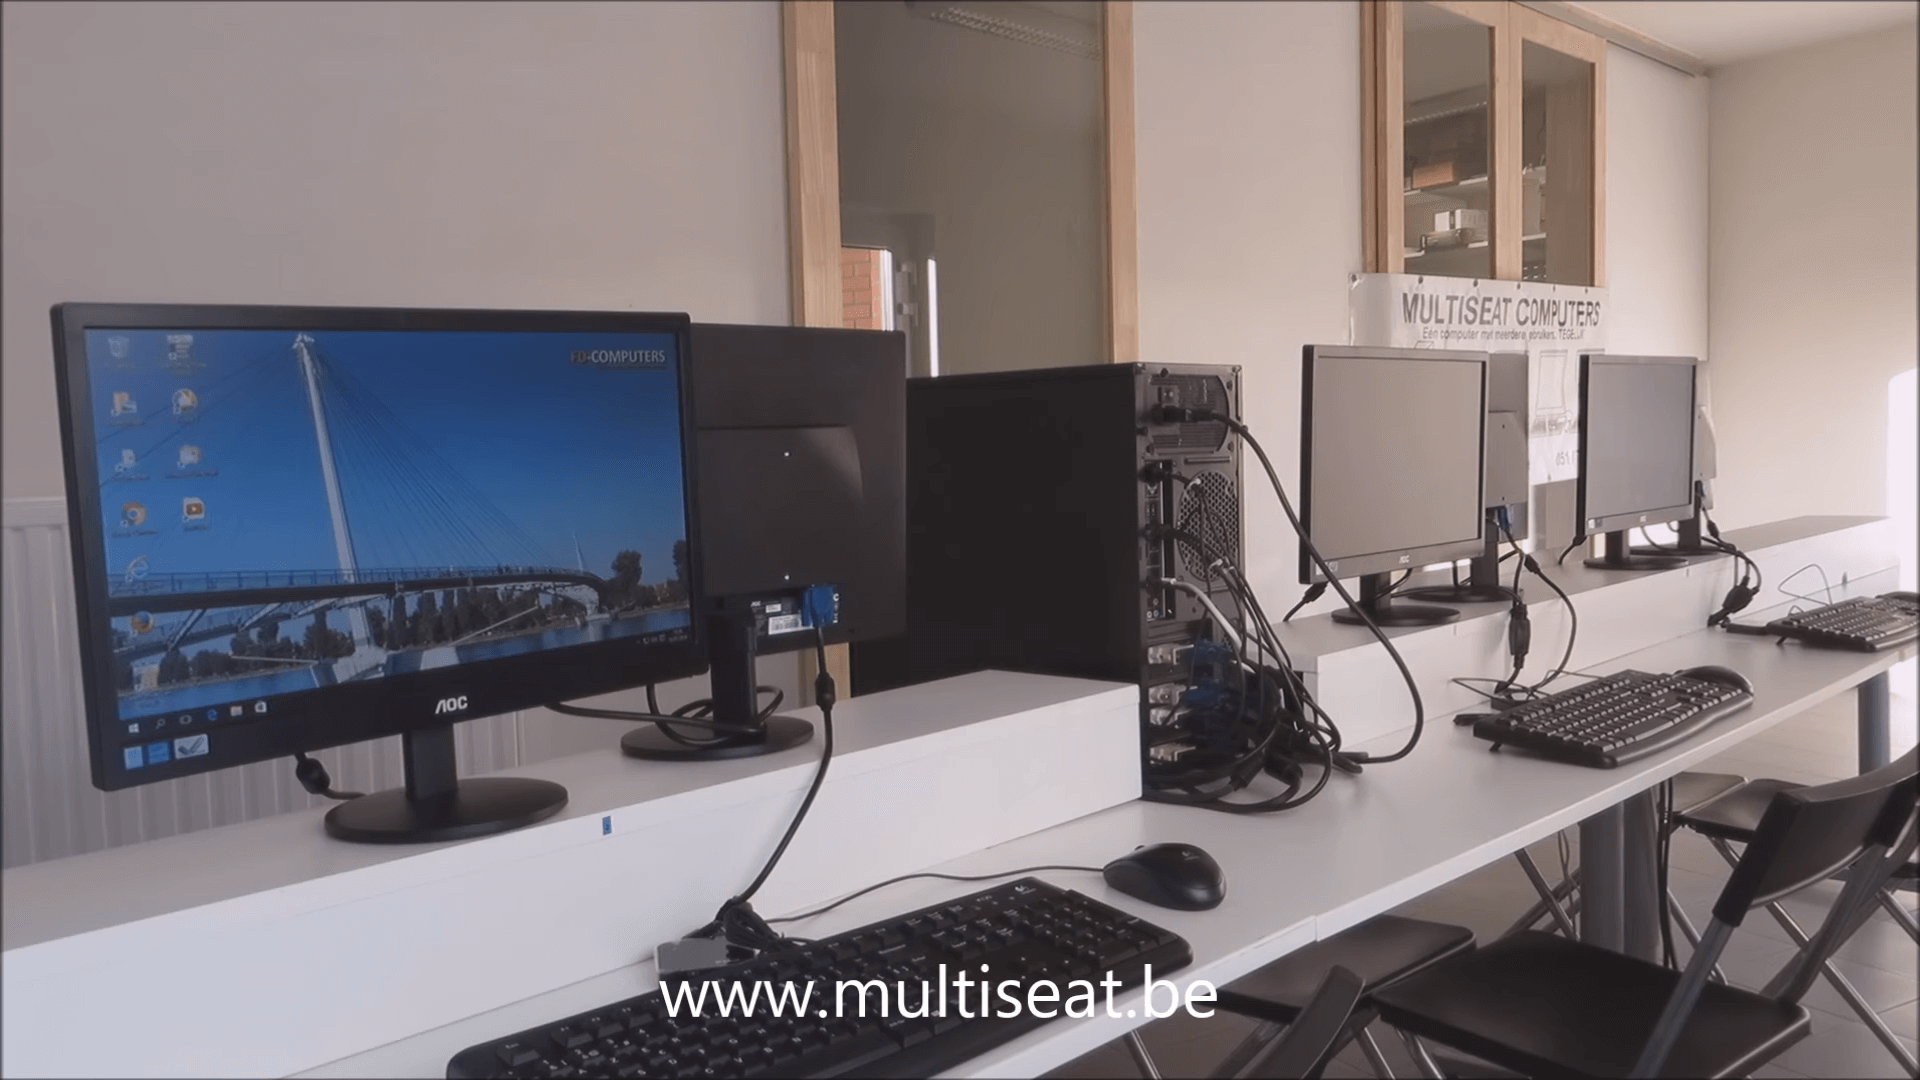 Встречайте Multiseat для Windows 10